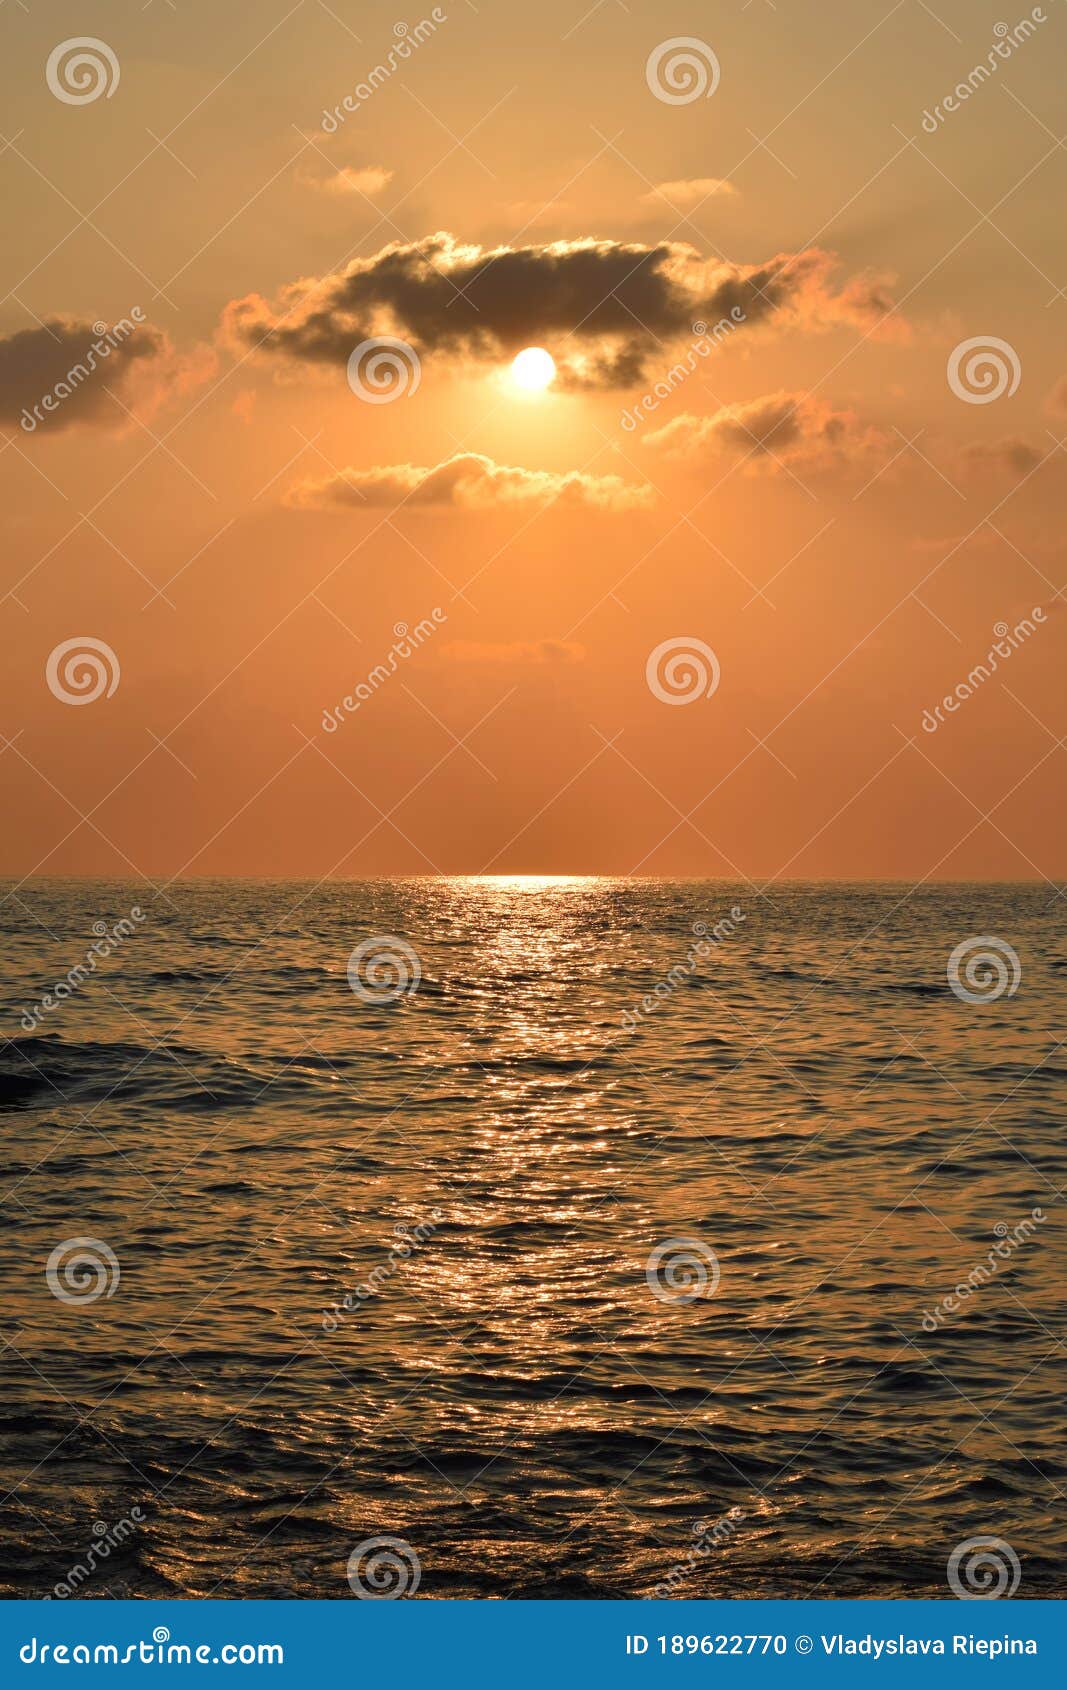 sunset sky. sea sunset background